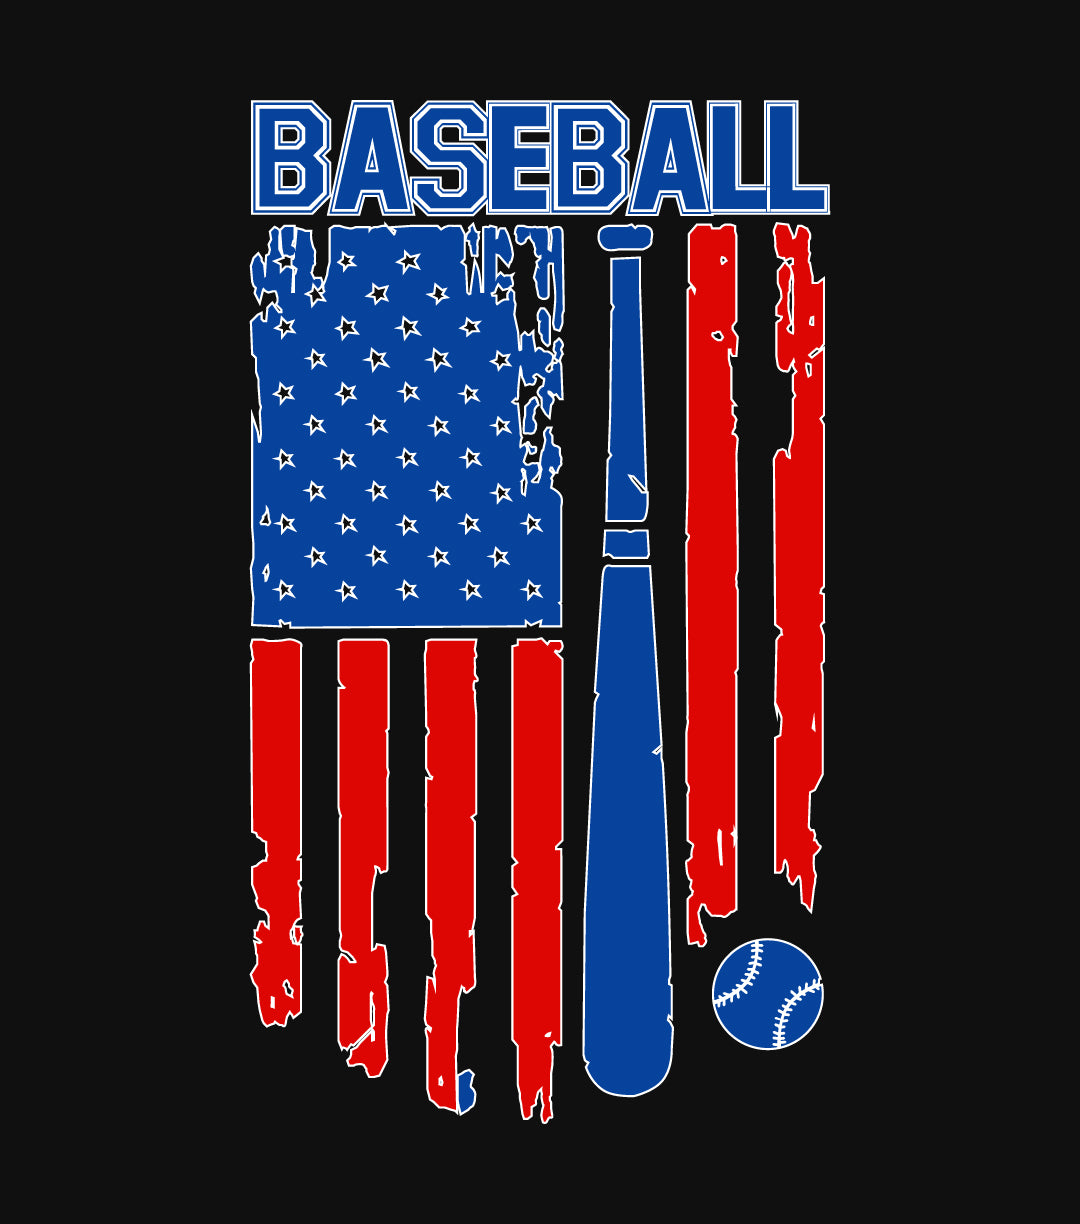 Vintage Cool Baseball American Flag T-Shirt